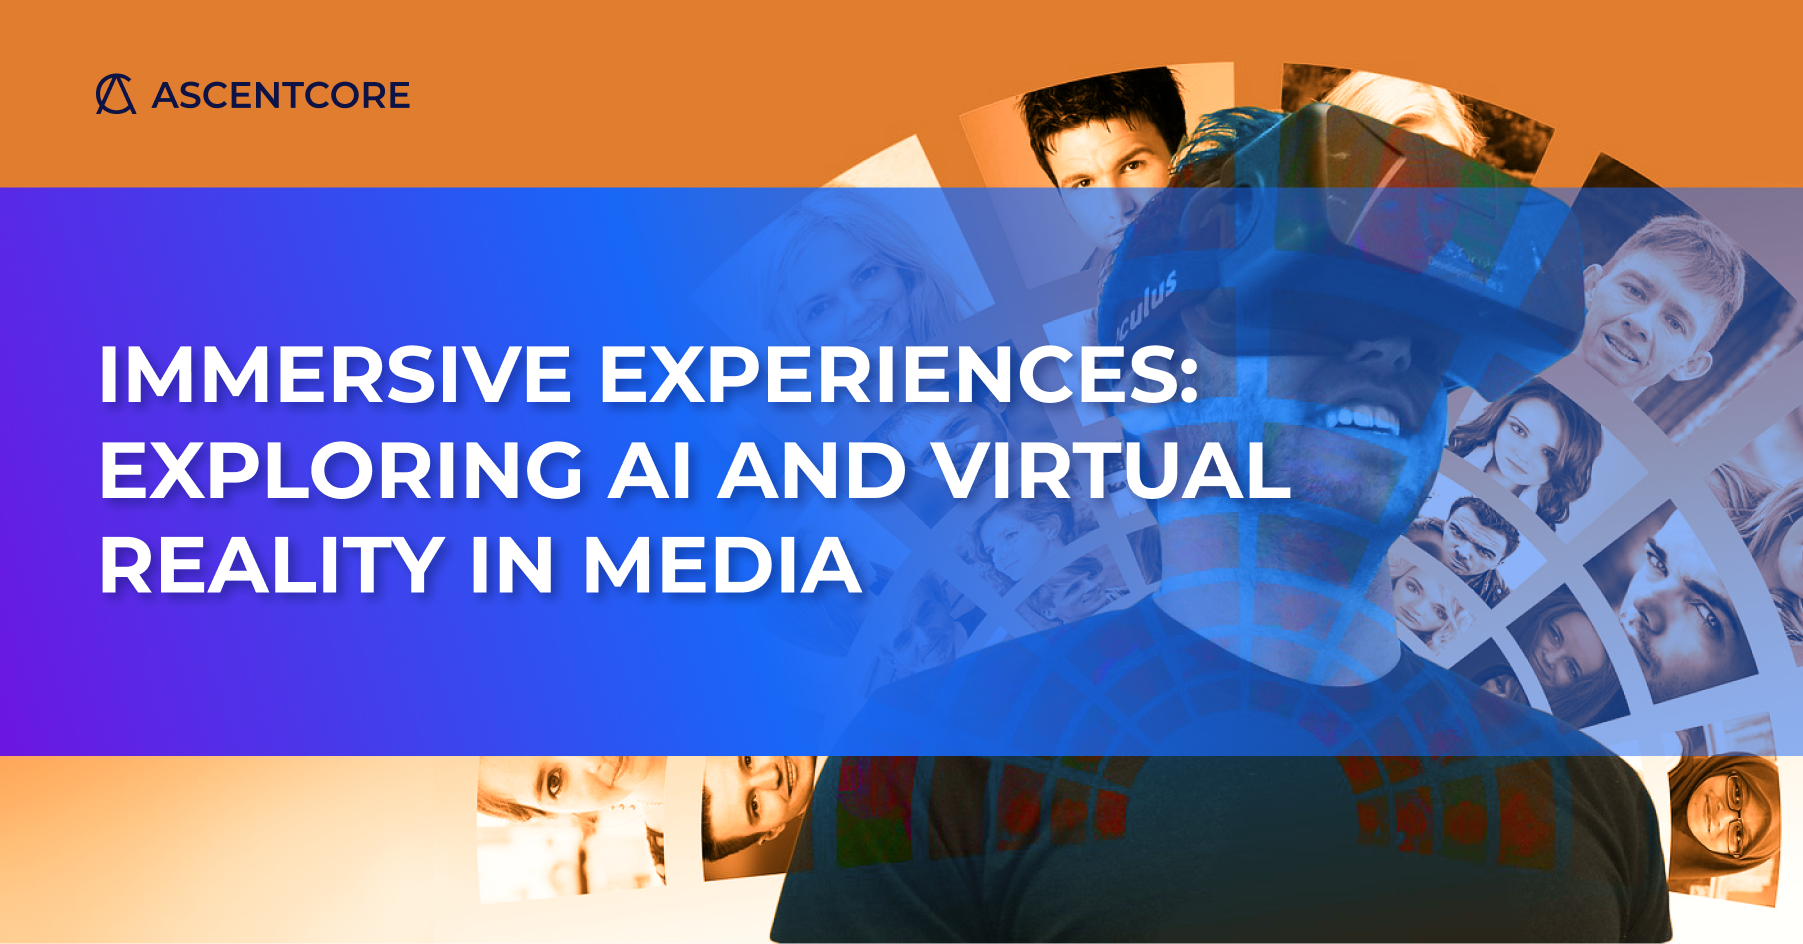 AscentCore Immersive Experiences: Exploring AI and VR in media